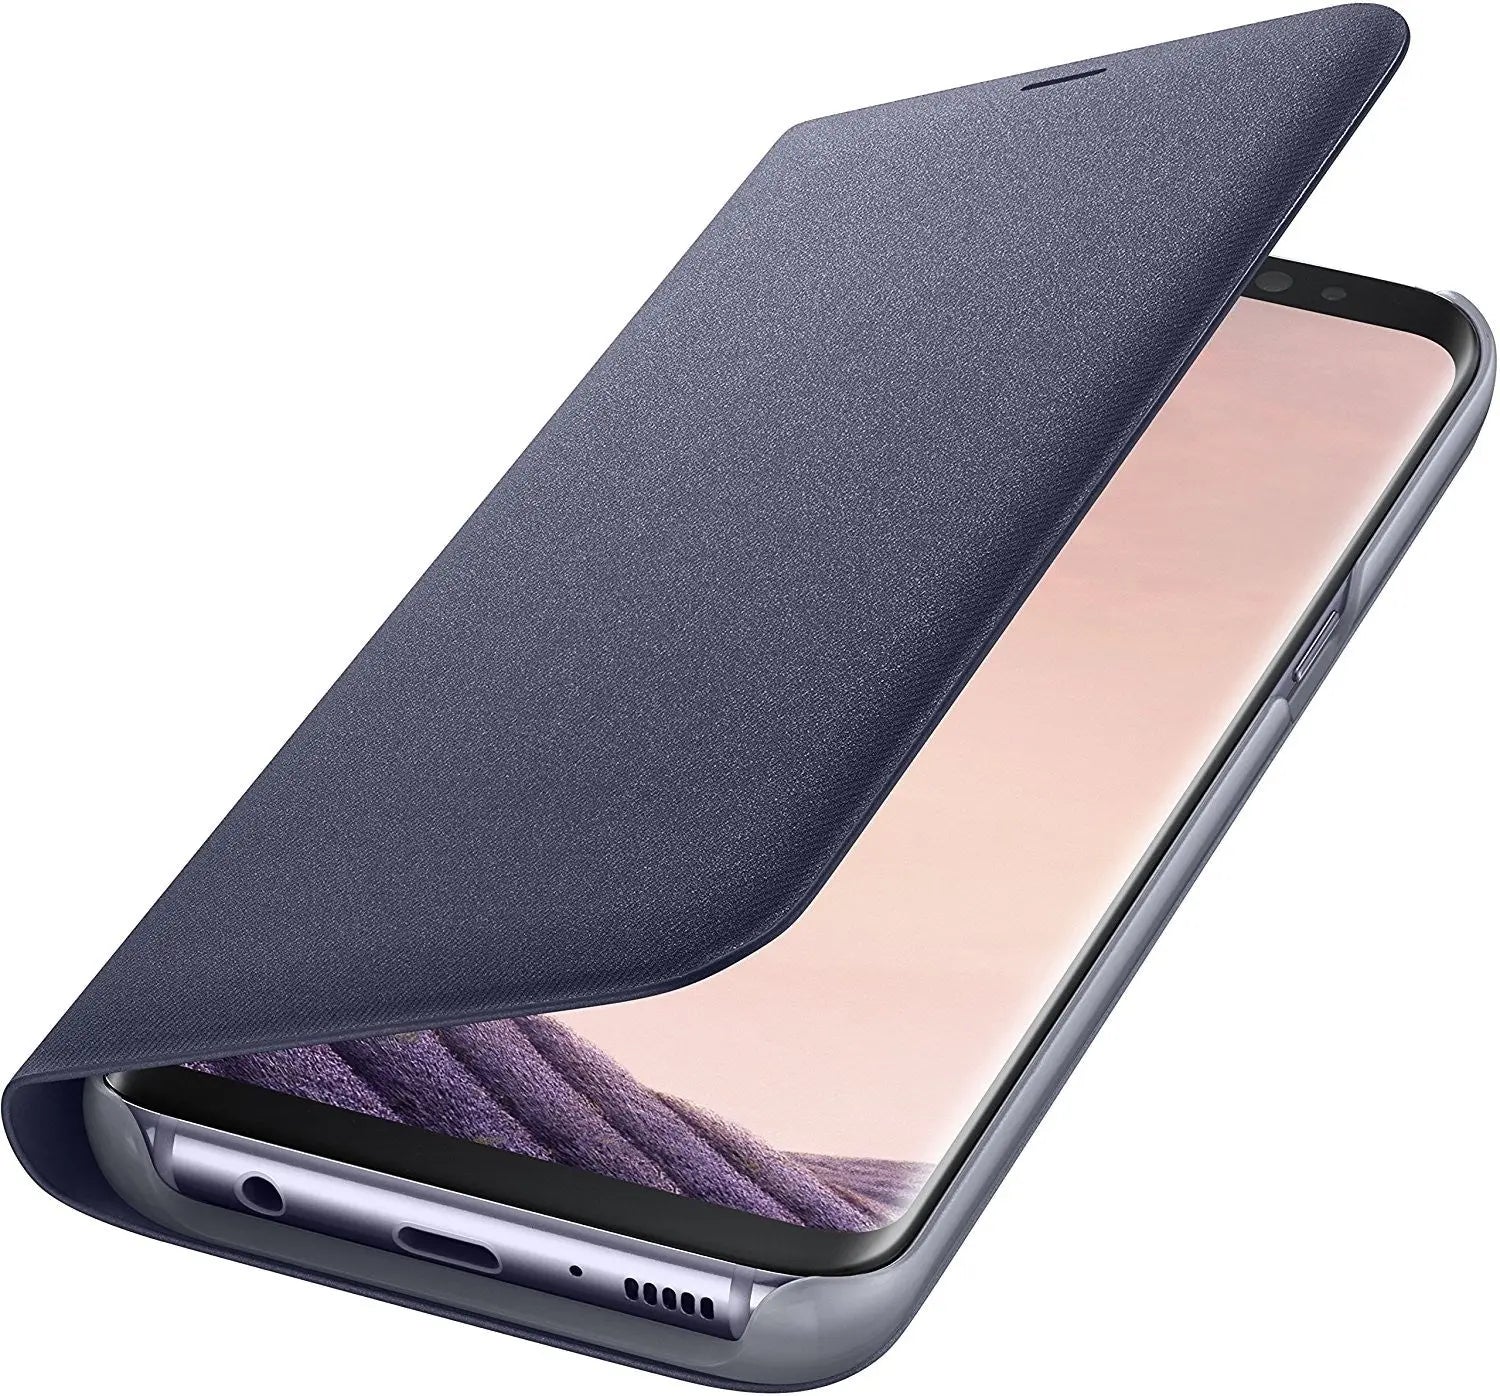 Protection rabat pour téléphone mobile Samsung LED view cover (violet) - Samsung Galaxy S8 Samsung